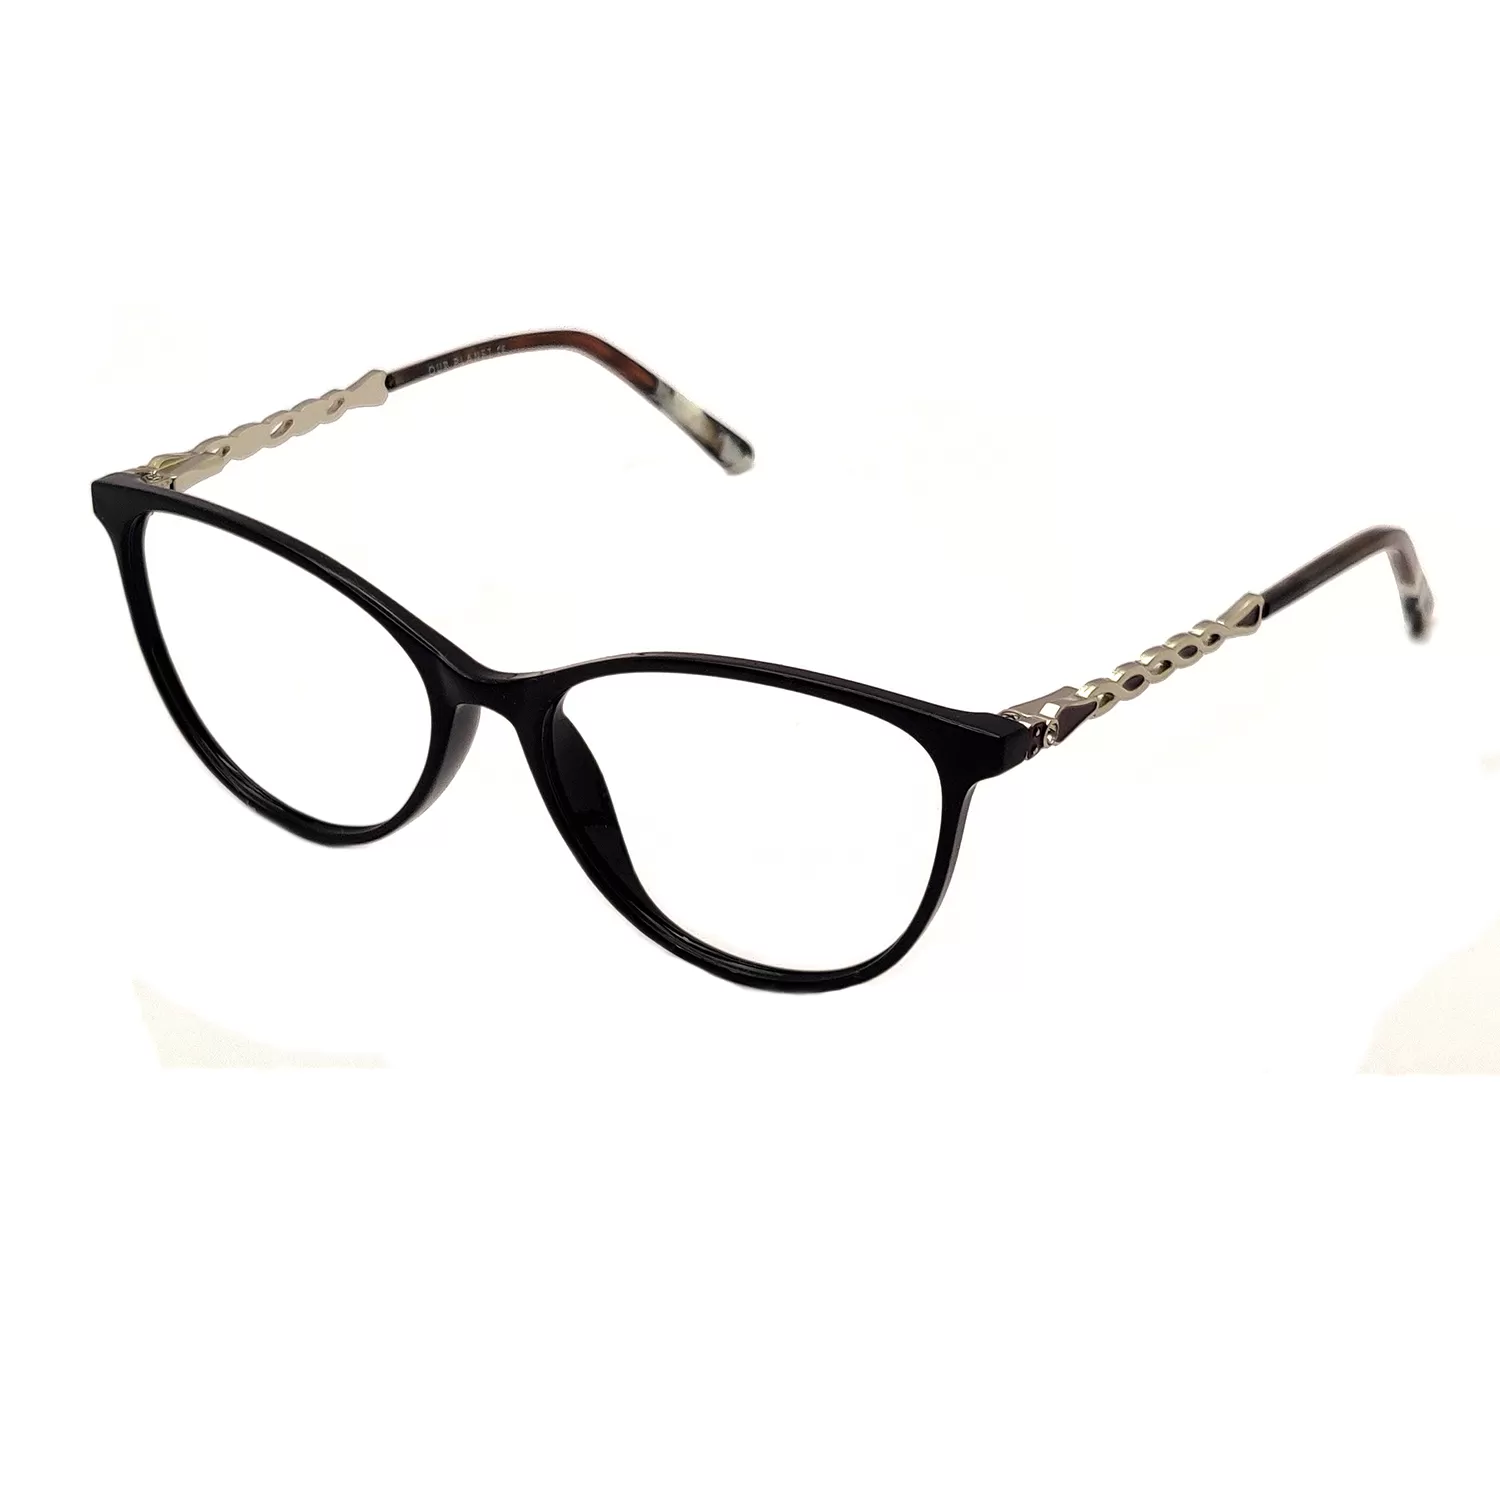 Buy latest eyeglasses online at chashmah.com